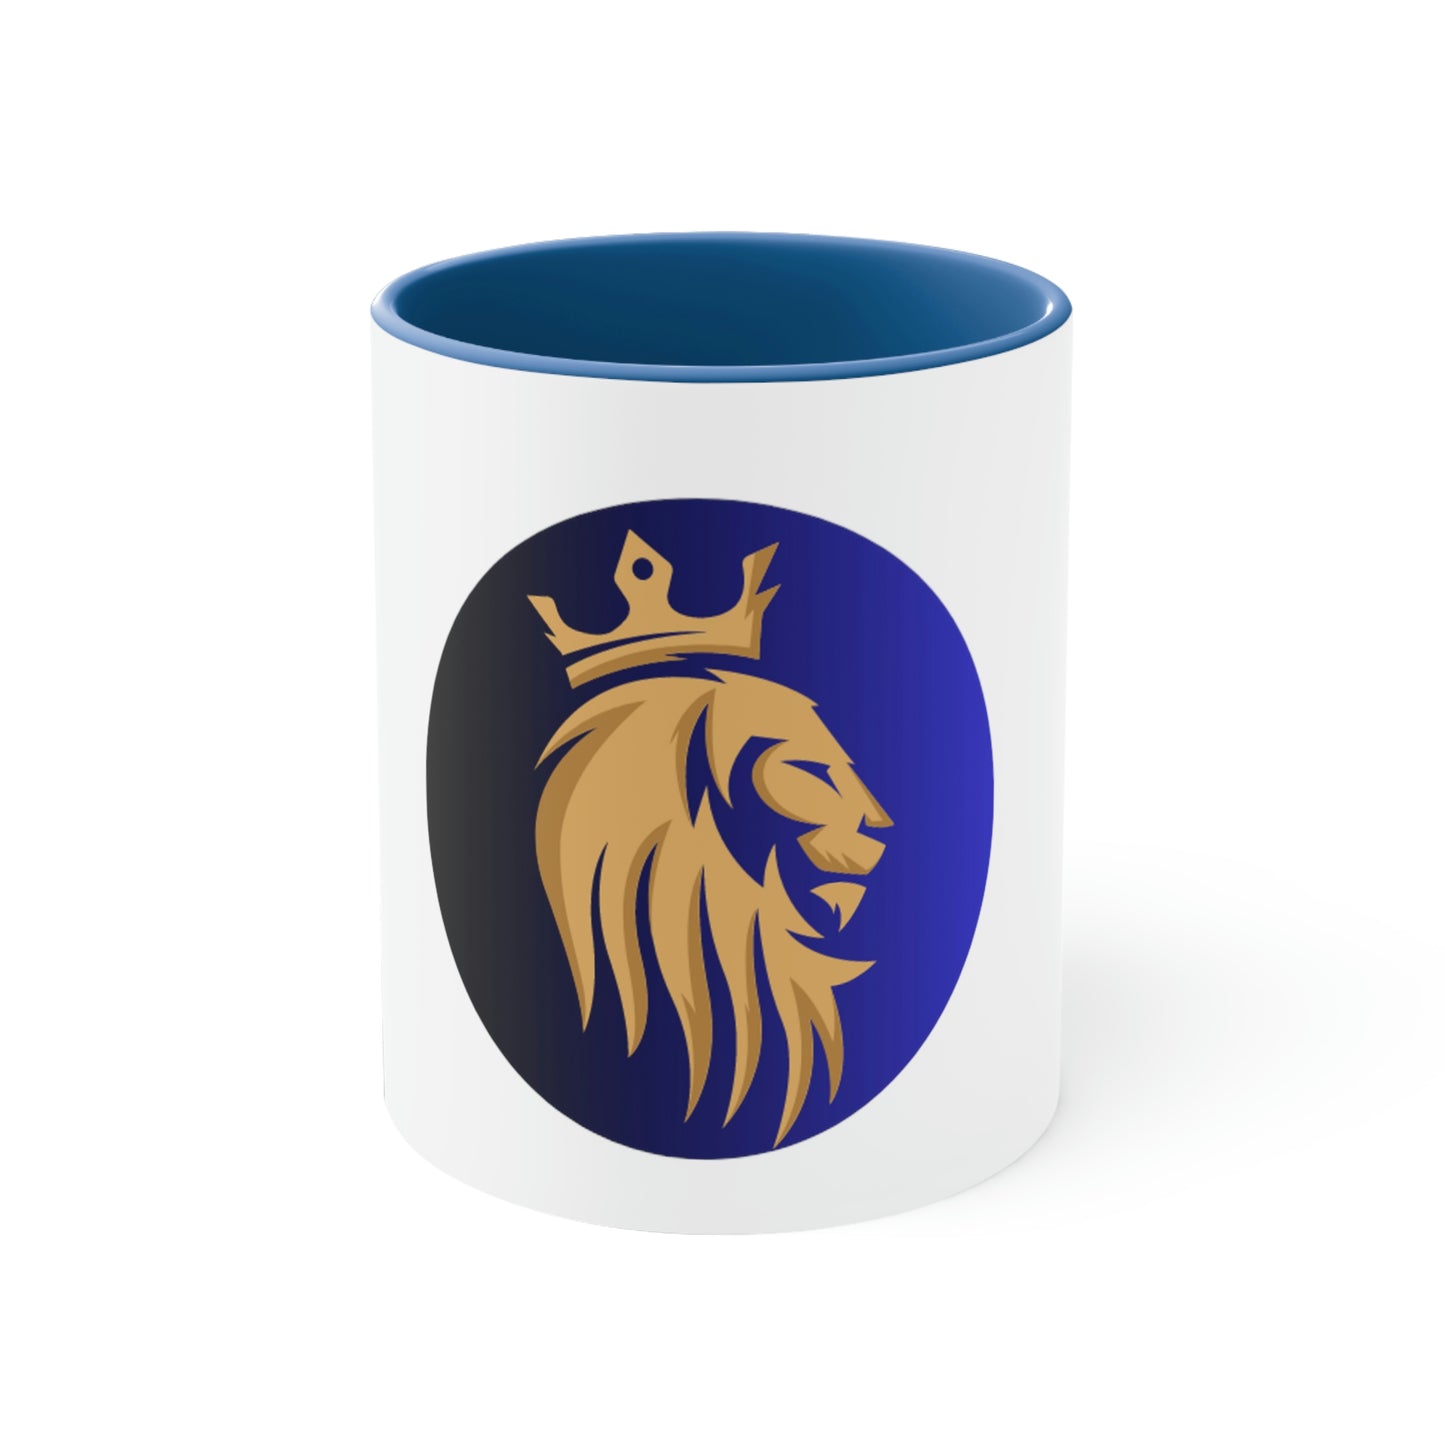 Accent Coffee Mug, 11oz - Gold/Blue Lion